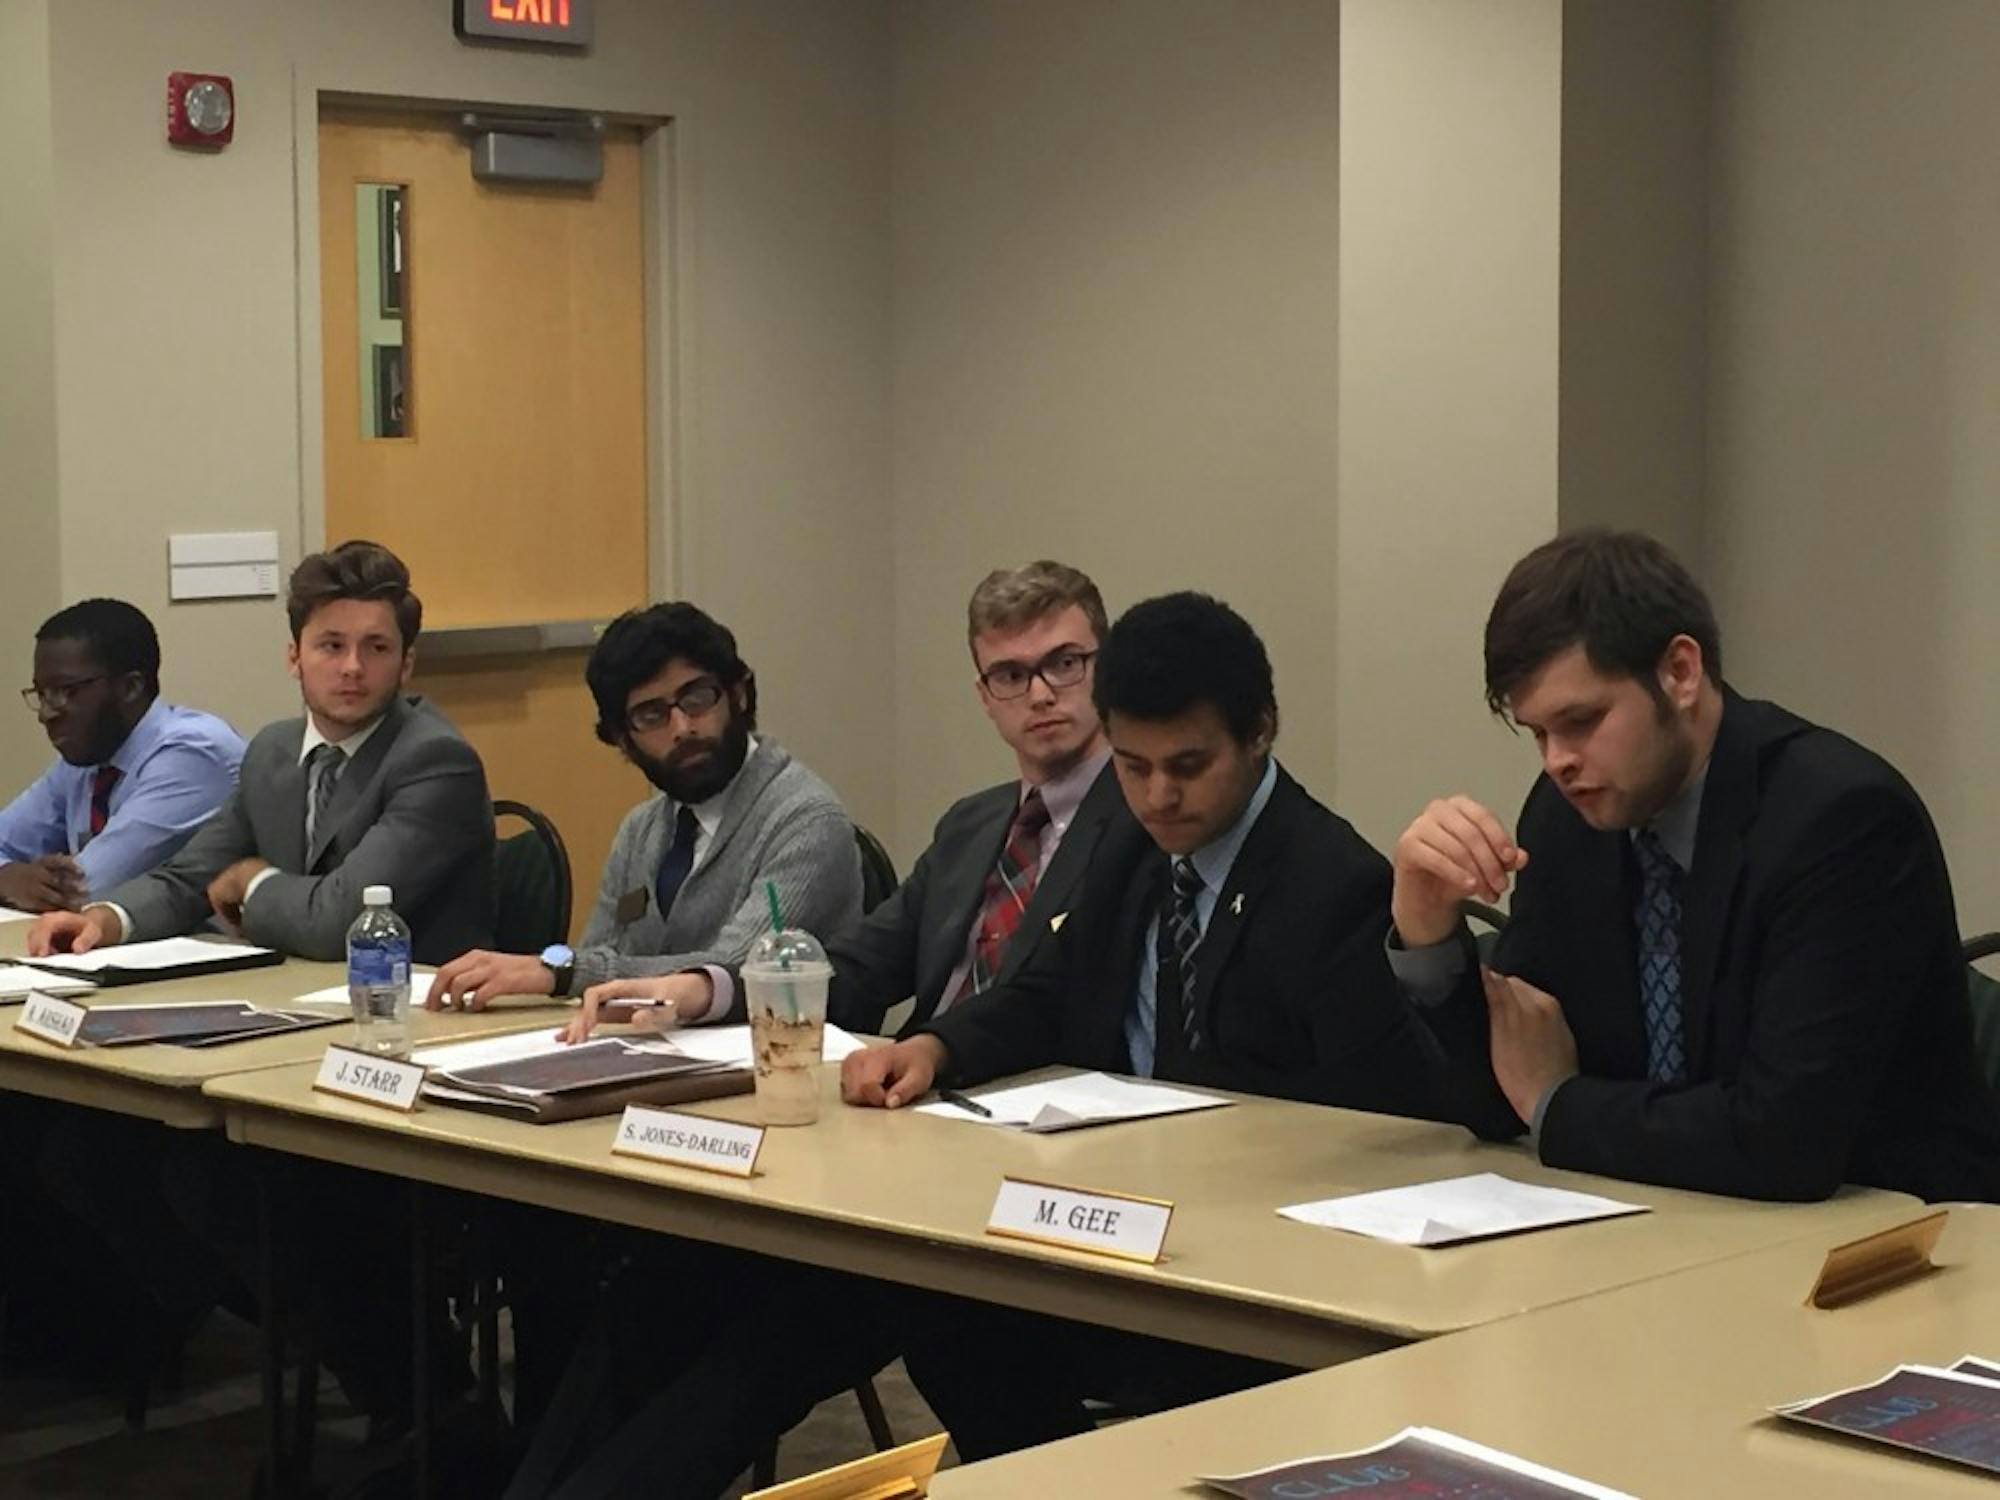 The Student Senate held it's regular meeting on Nov. 18.